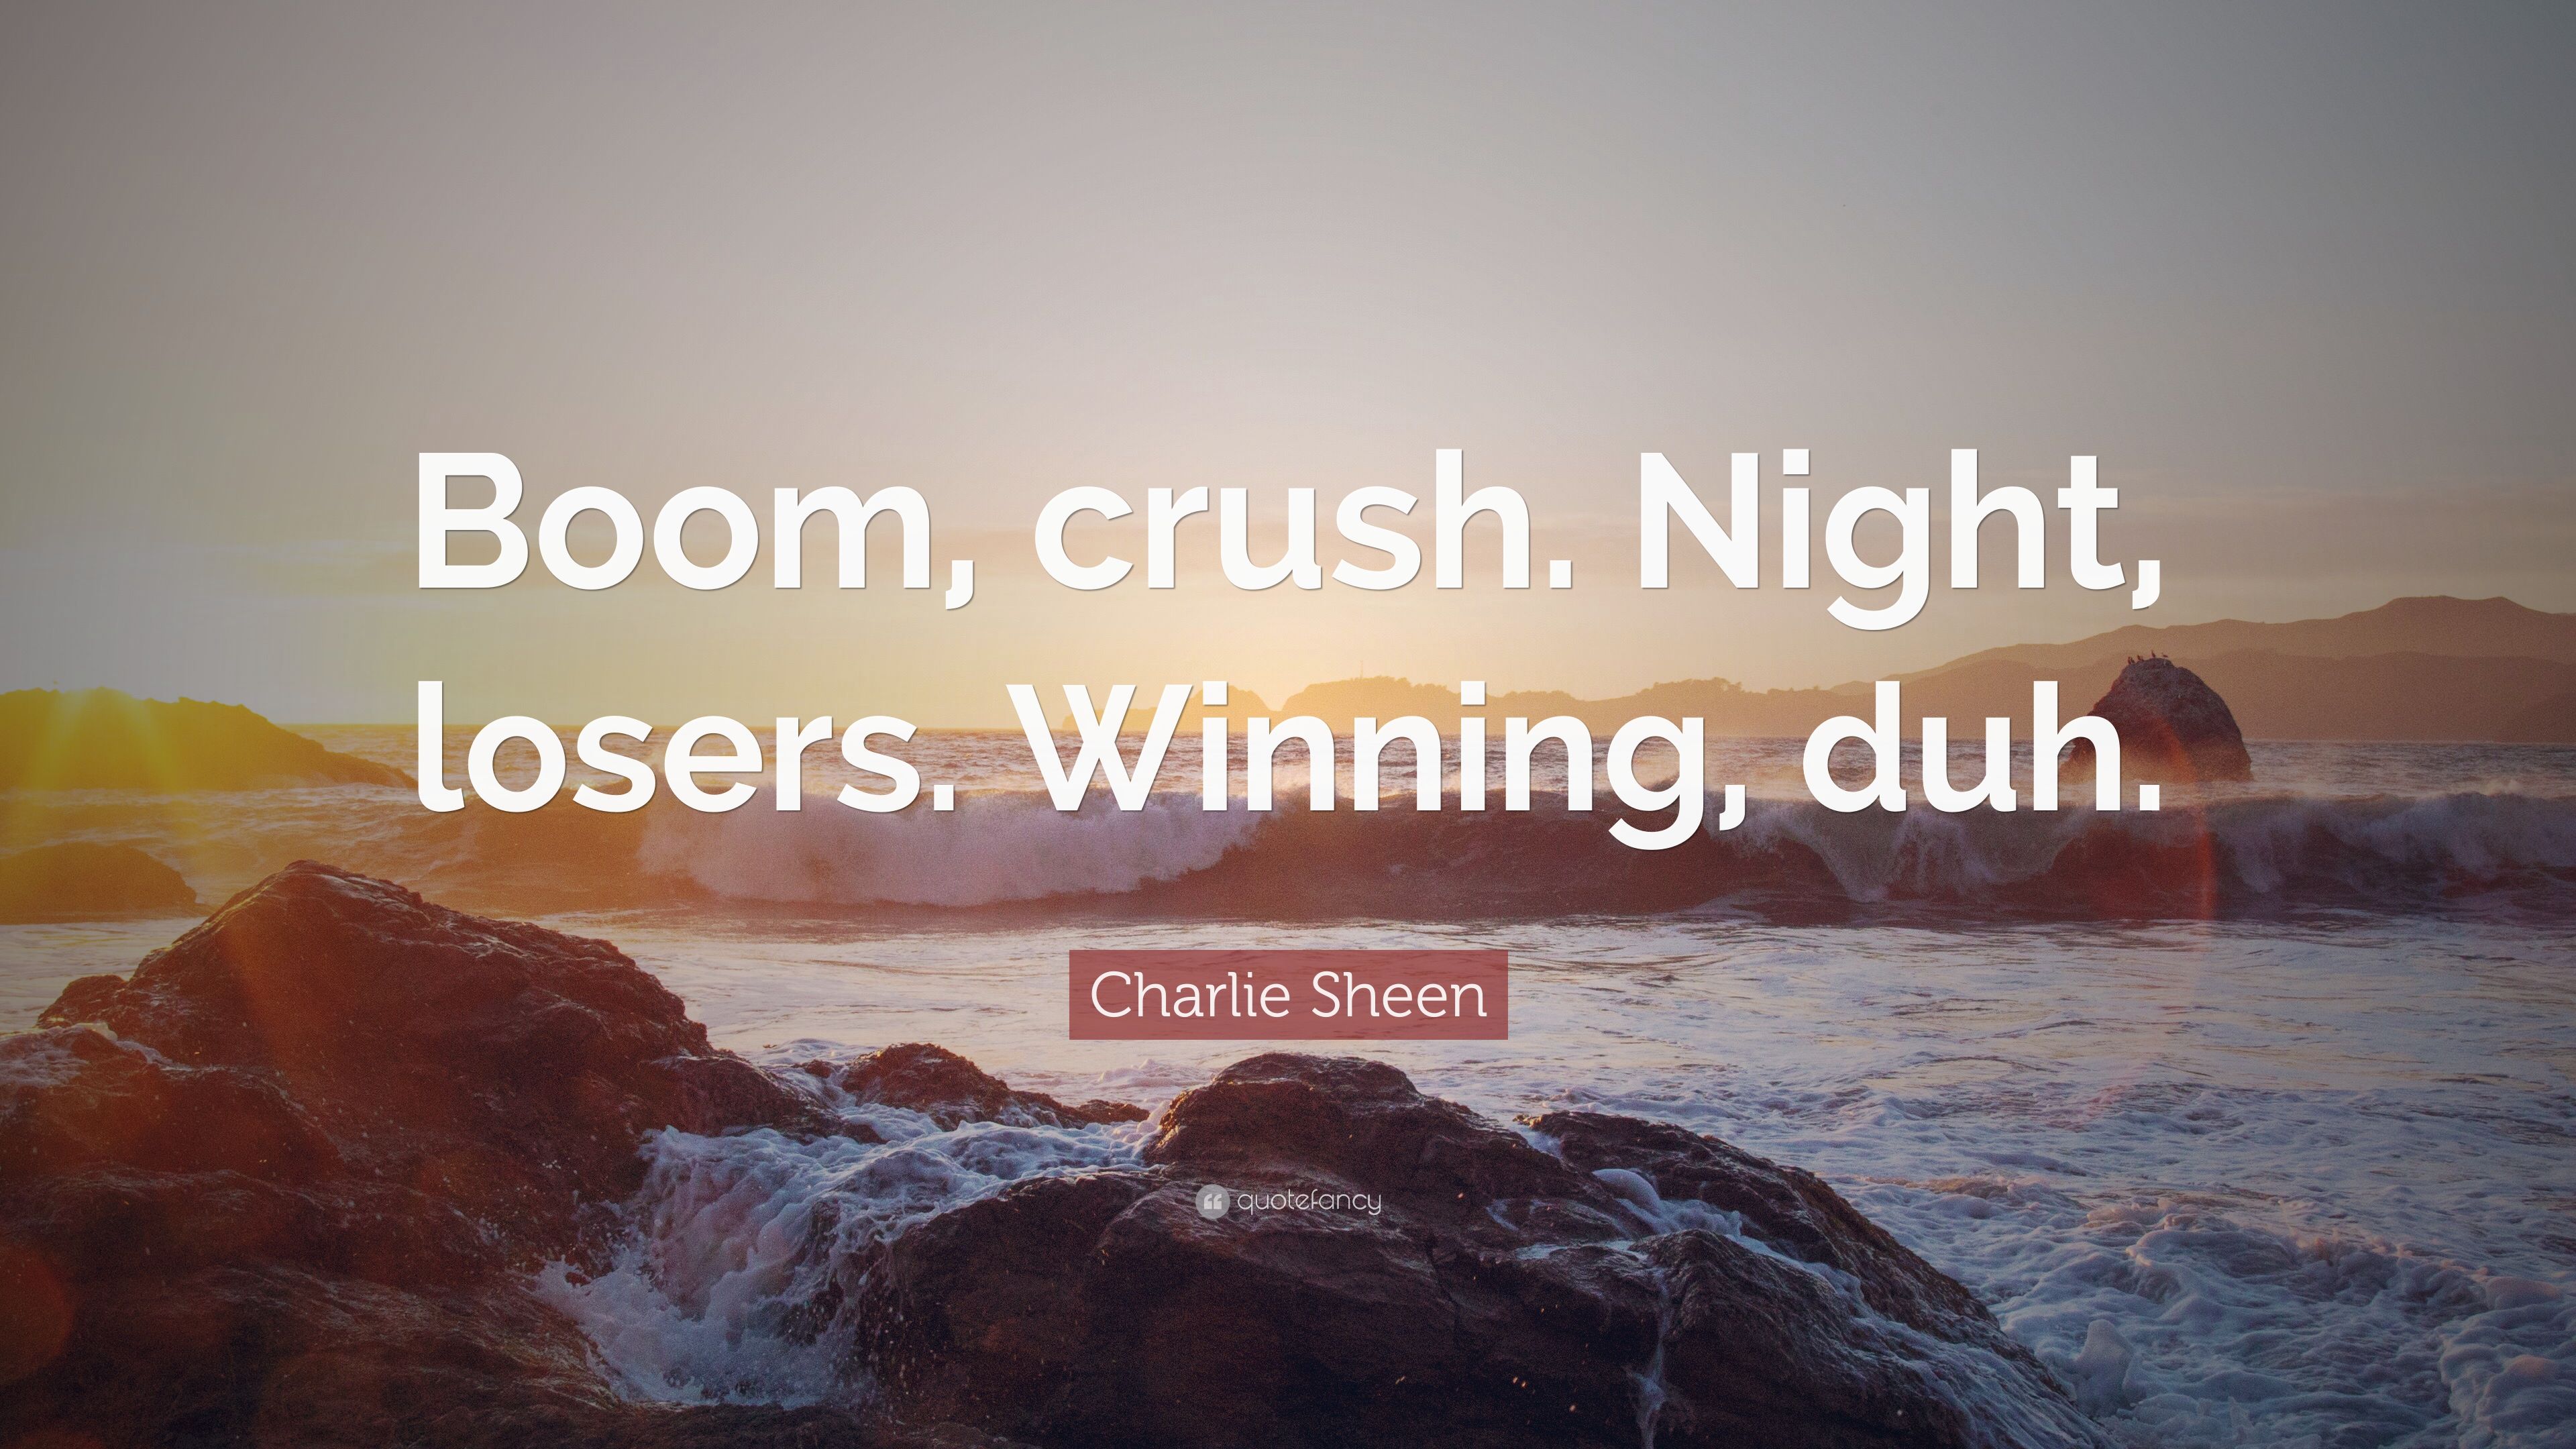 Charlie Sheen Quote: “Boom, crush. Night, losers. Winning, duh.” (9 wallpaper)